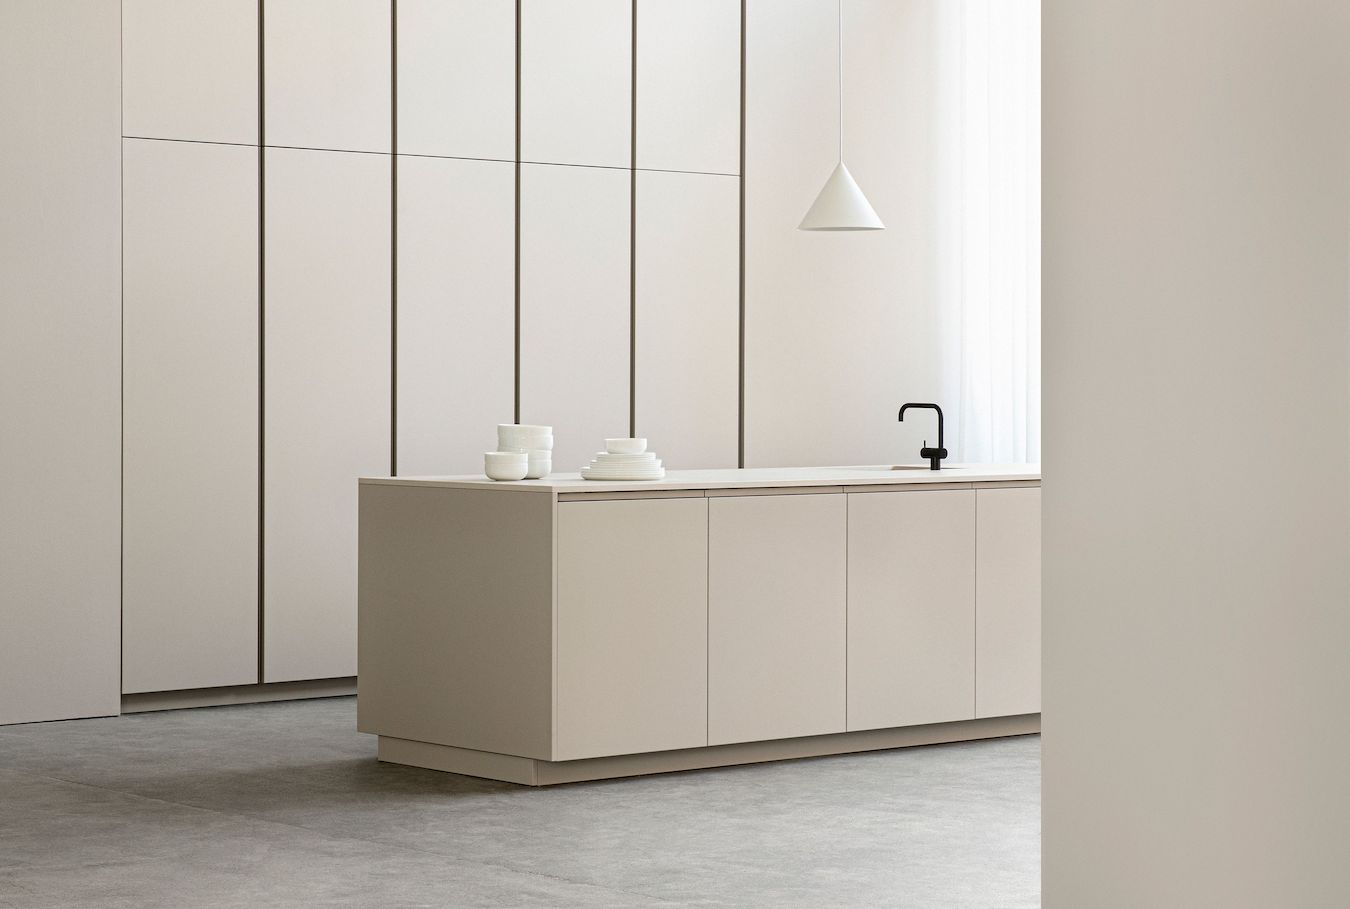 Profile Transforms IKEA Cabinets into a Minimalist Kitchen